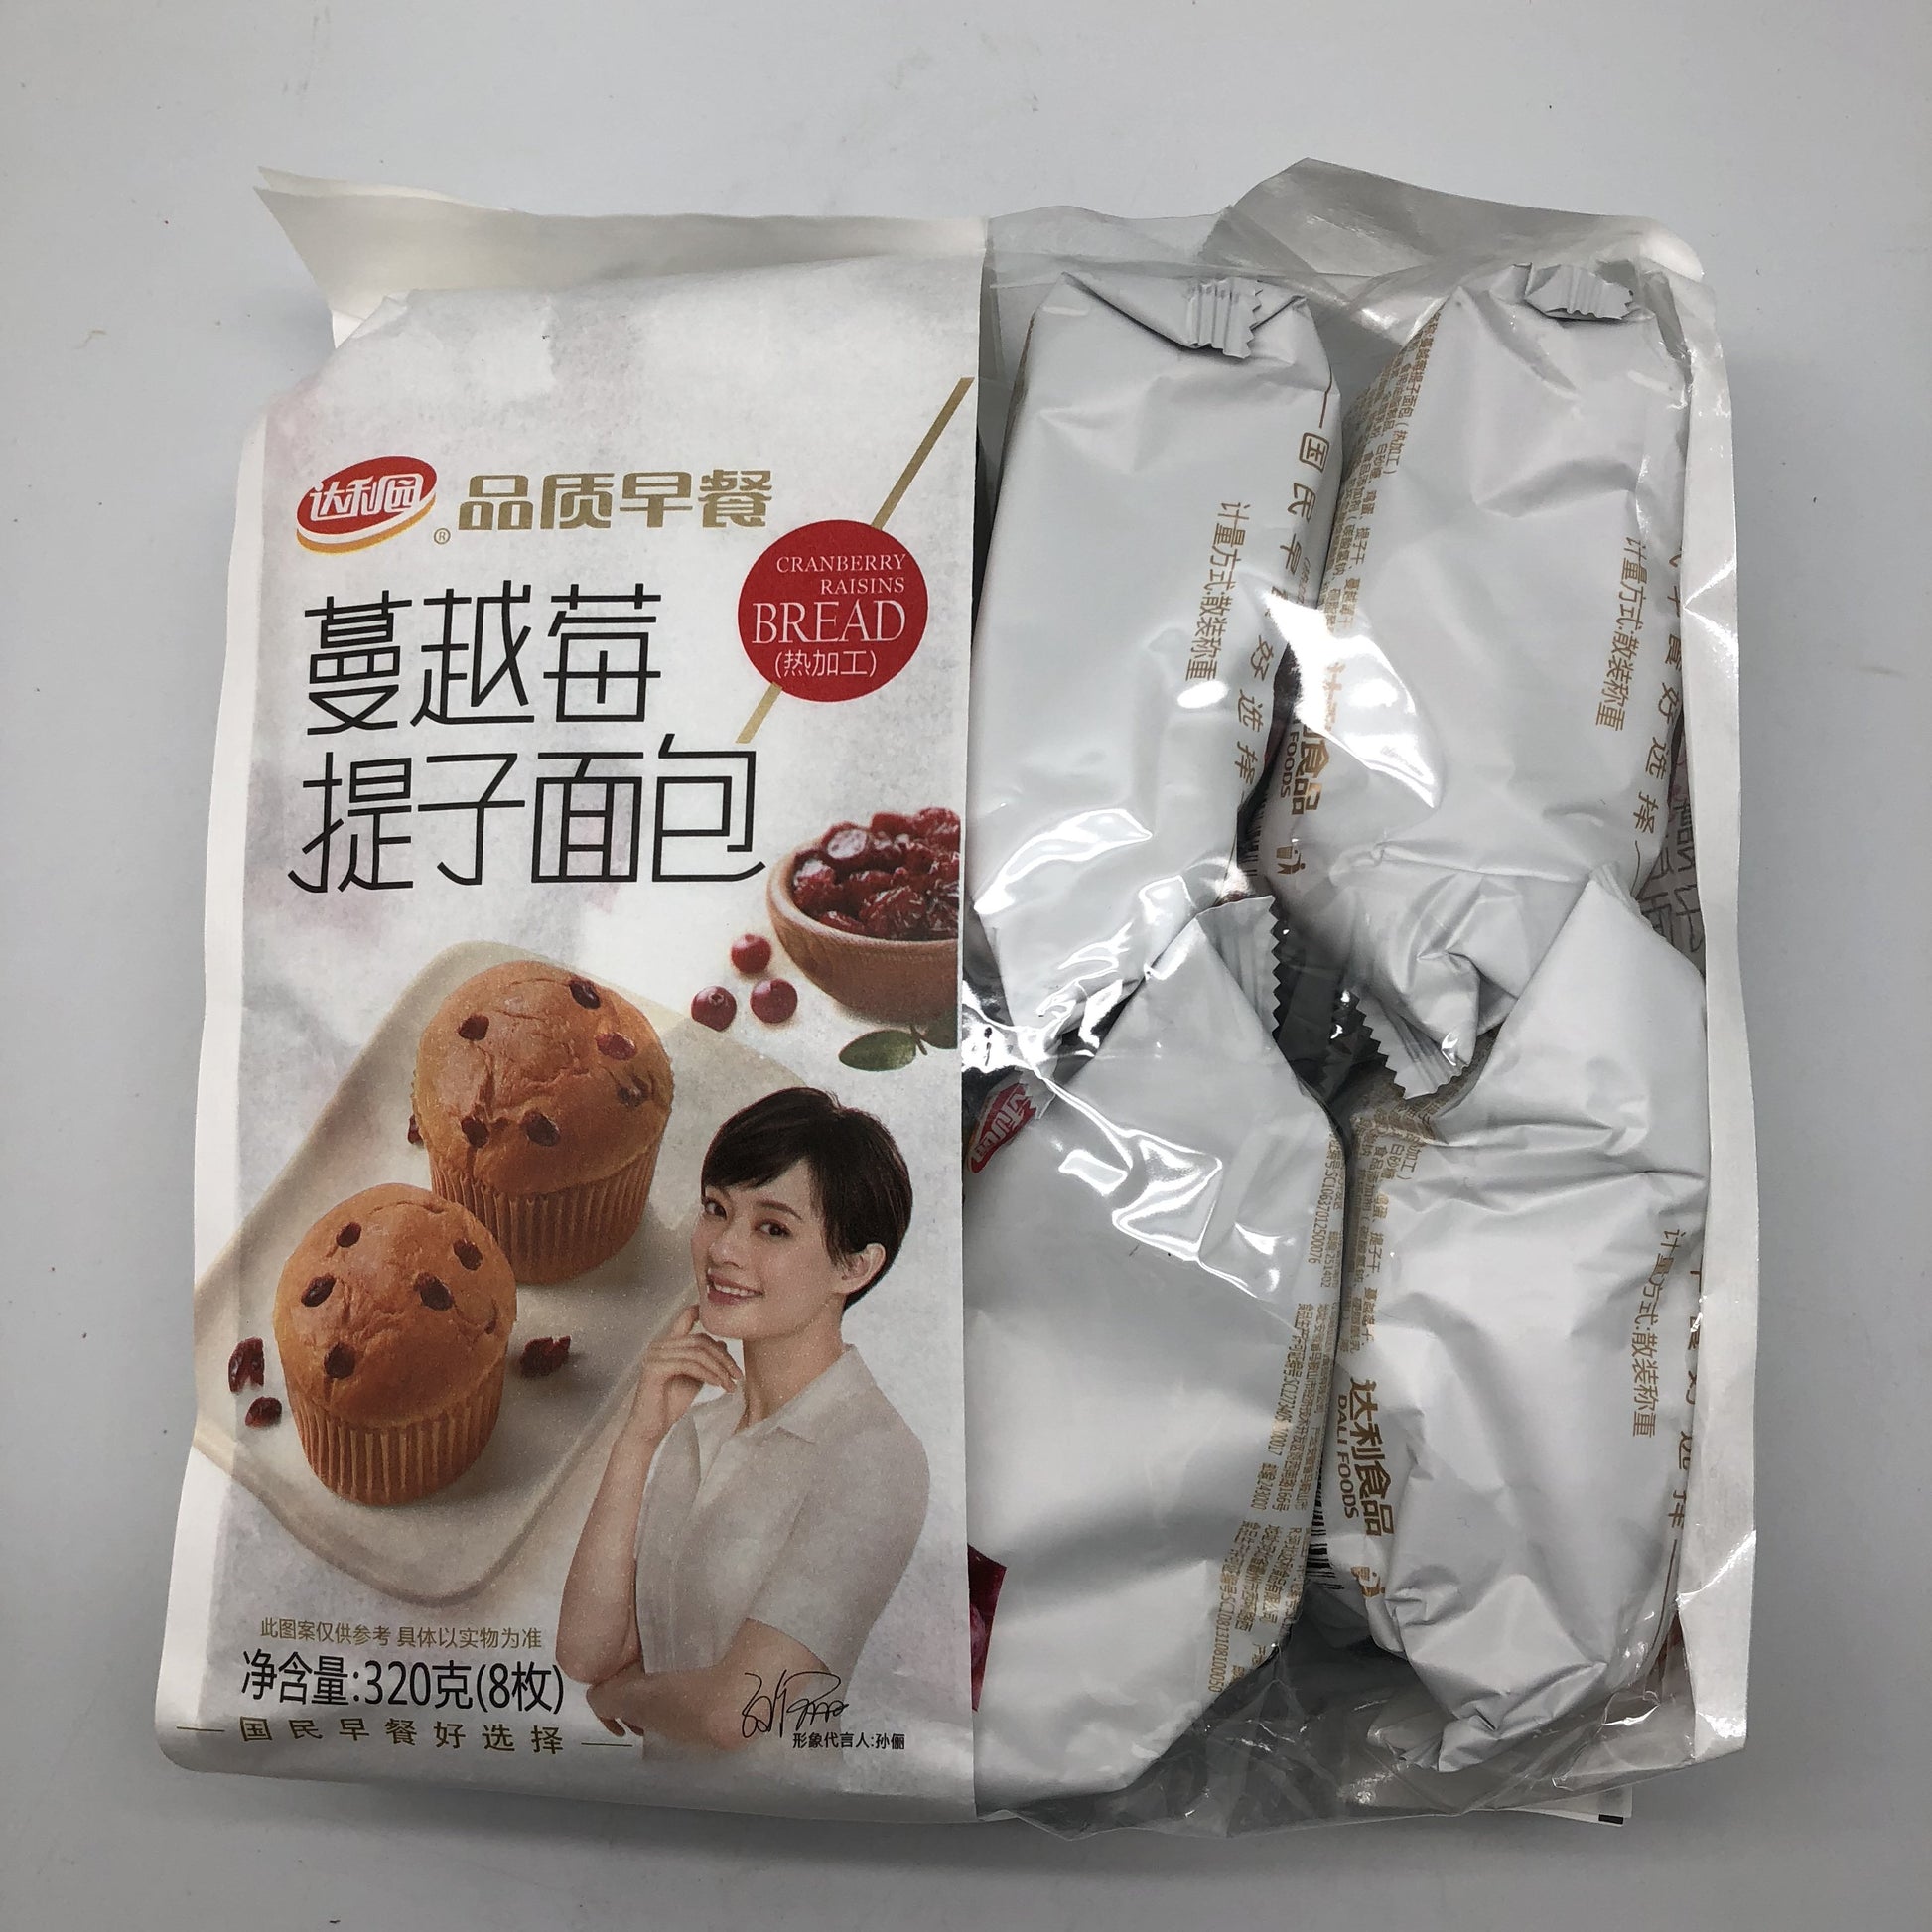 C026MG Da Li Brand - Cranberry Raisins Bread 8 pcs - 16 bags/CTN - New Eastland Pty Ltd - Asian food wholesalers